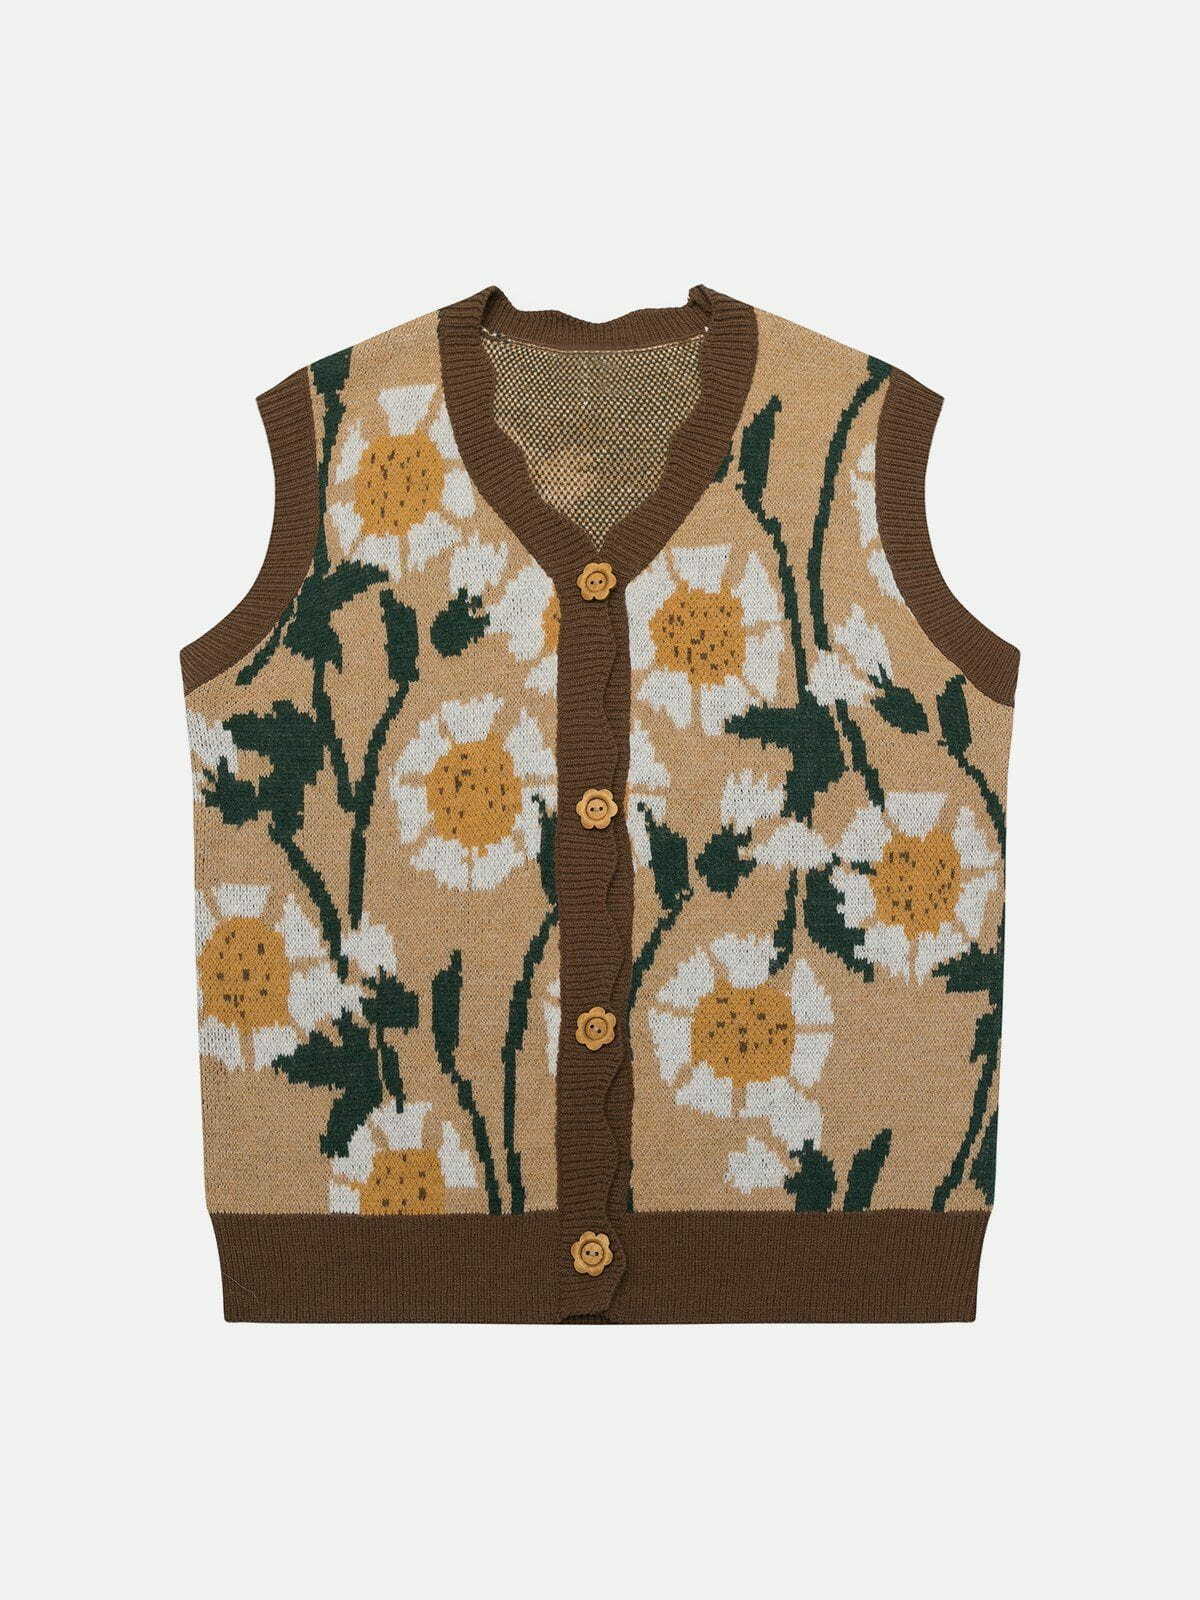 vintage sunflowers sweater vest retro chic y2k fashion essential 5567